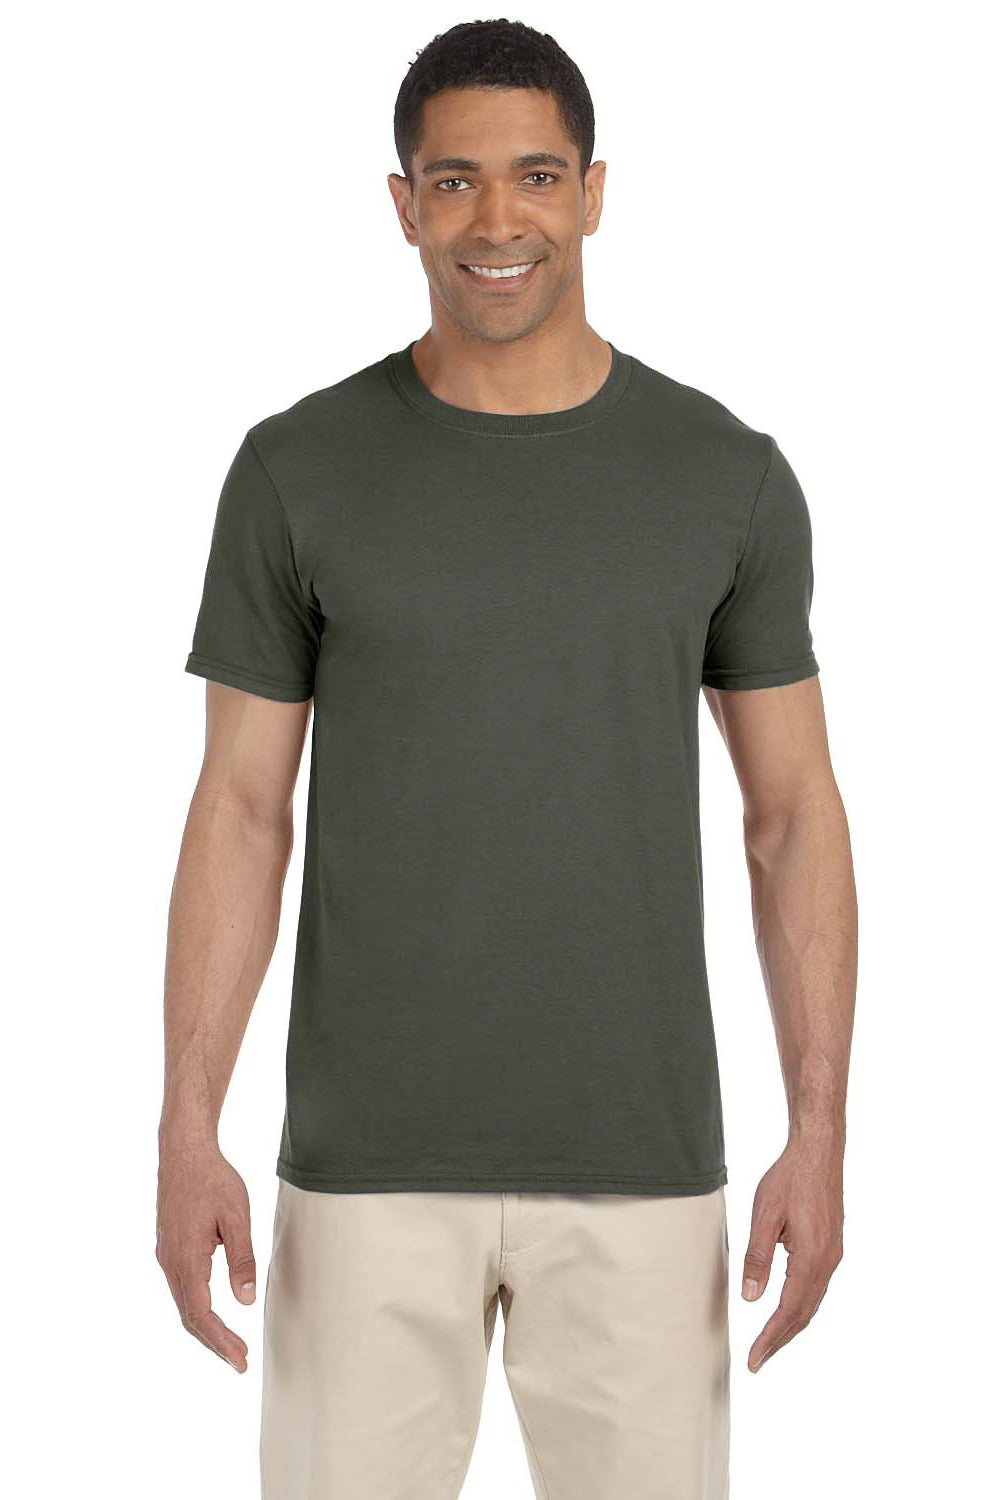 Gildan G640 Mens Softstyle Short Sleeve Crewneck T-Shirt Military Green Front